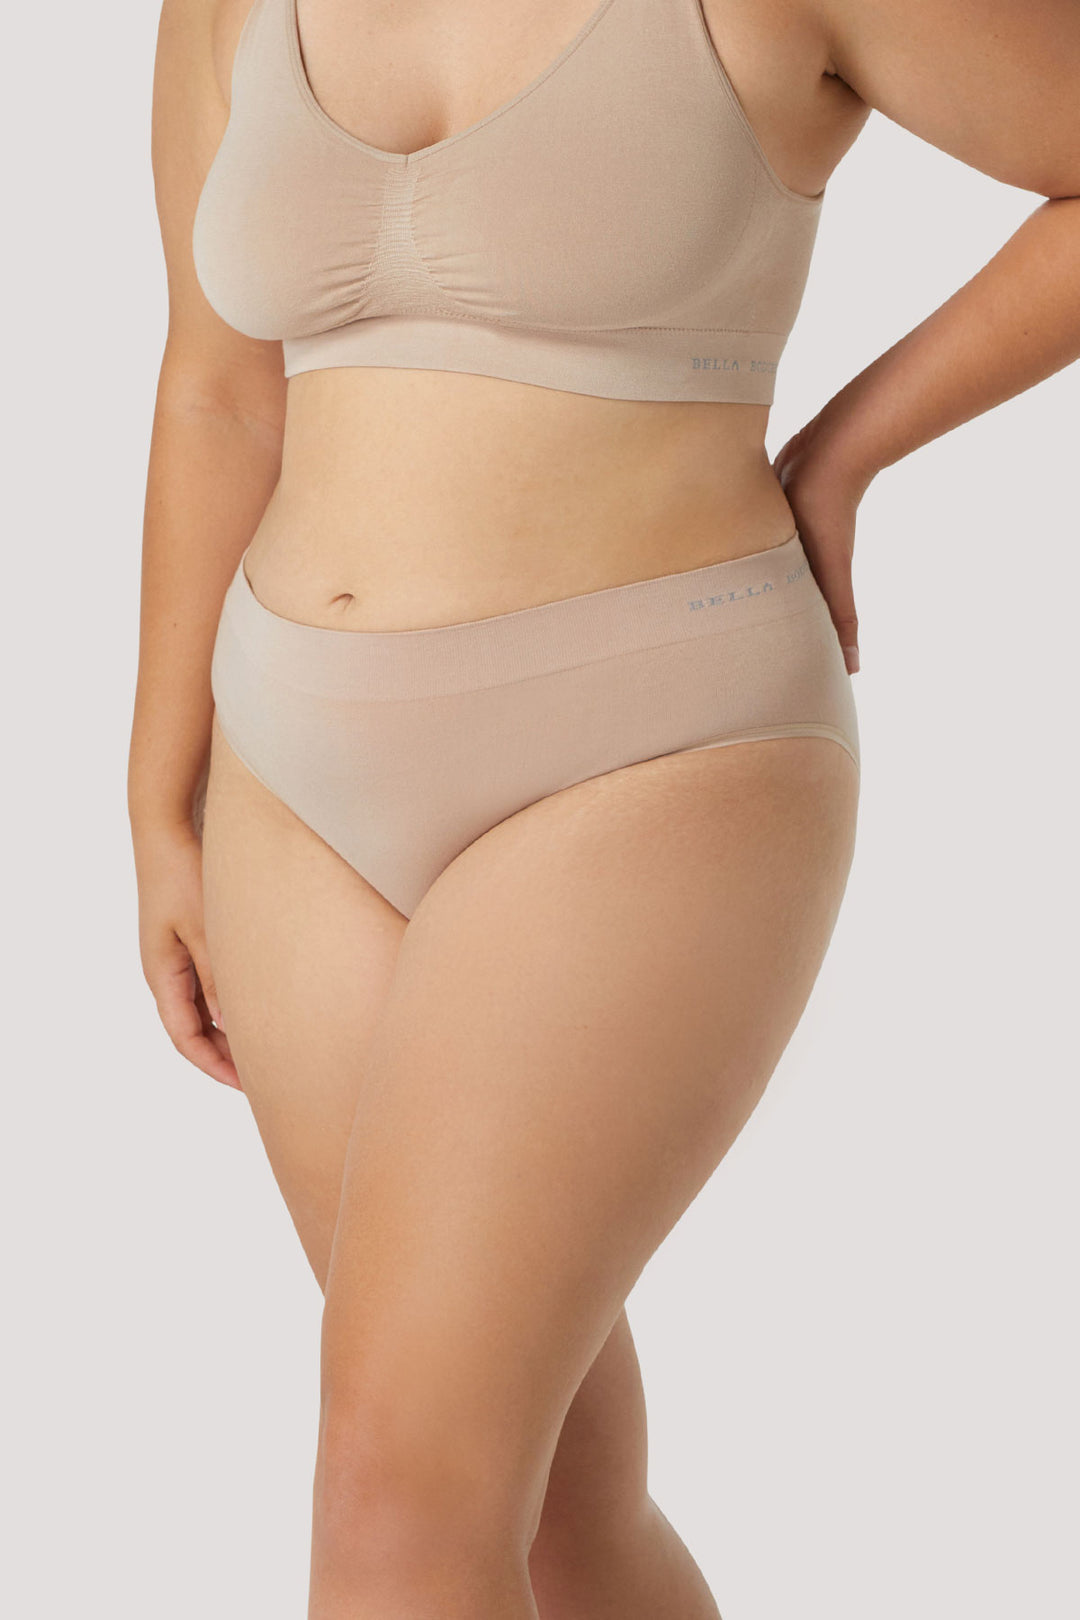 Women's comfortable & breathable underwear I Bamboo Knickers | Bella Bodies Australia I Sand | Side